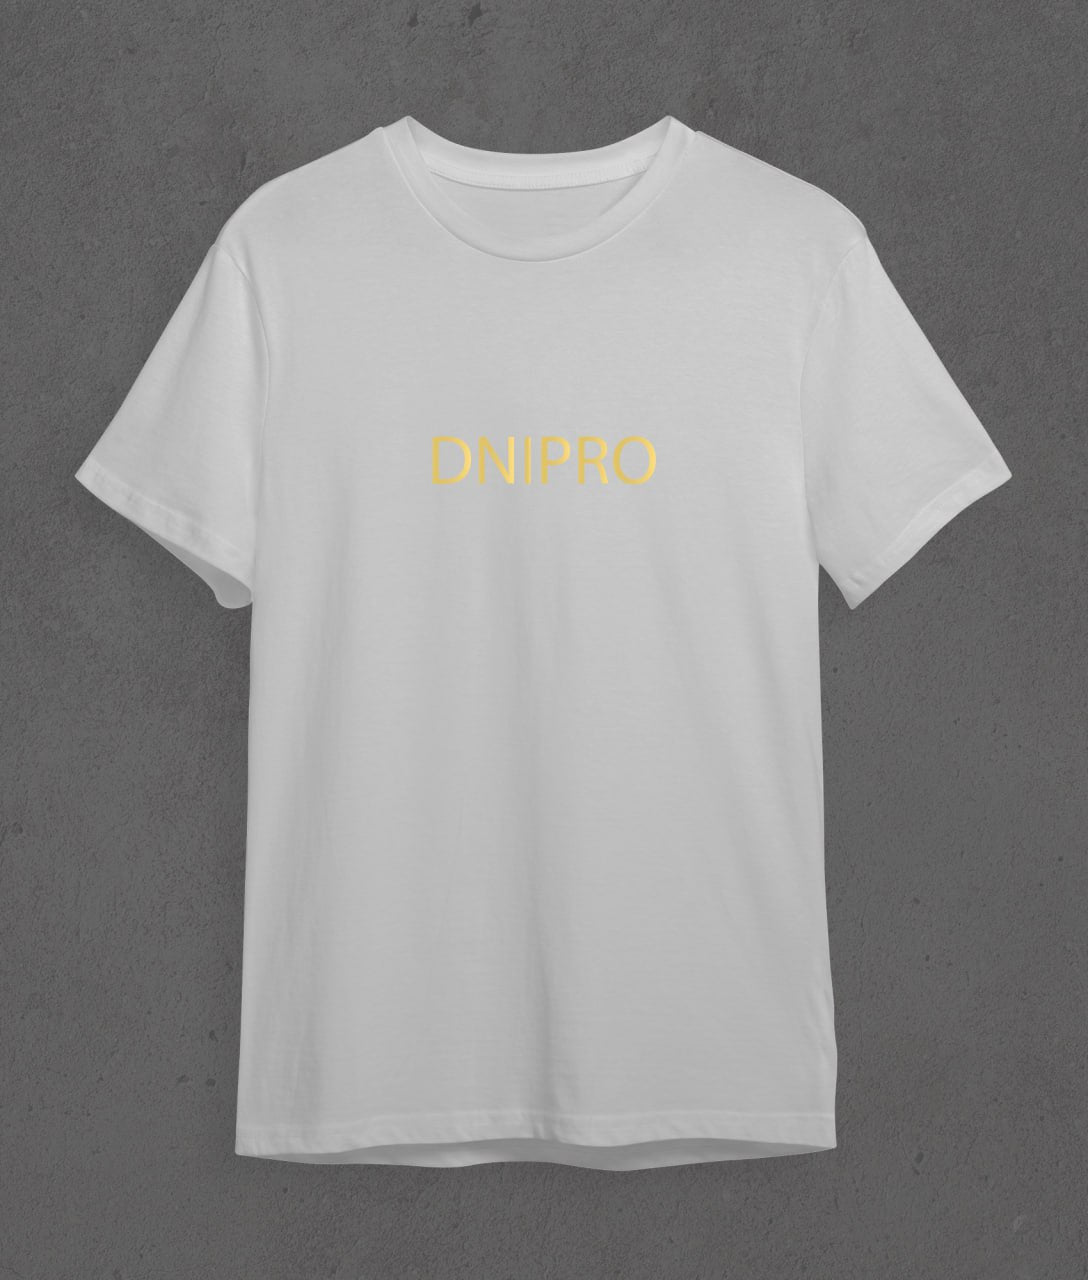 T-shirt Dnipro